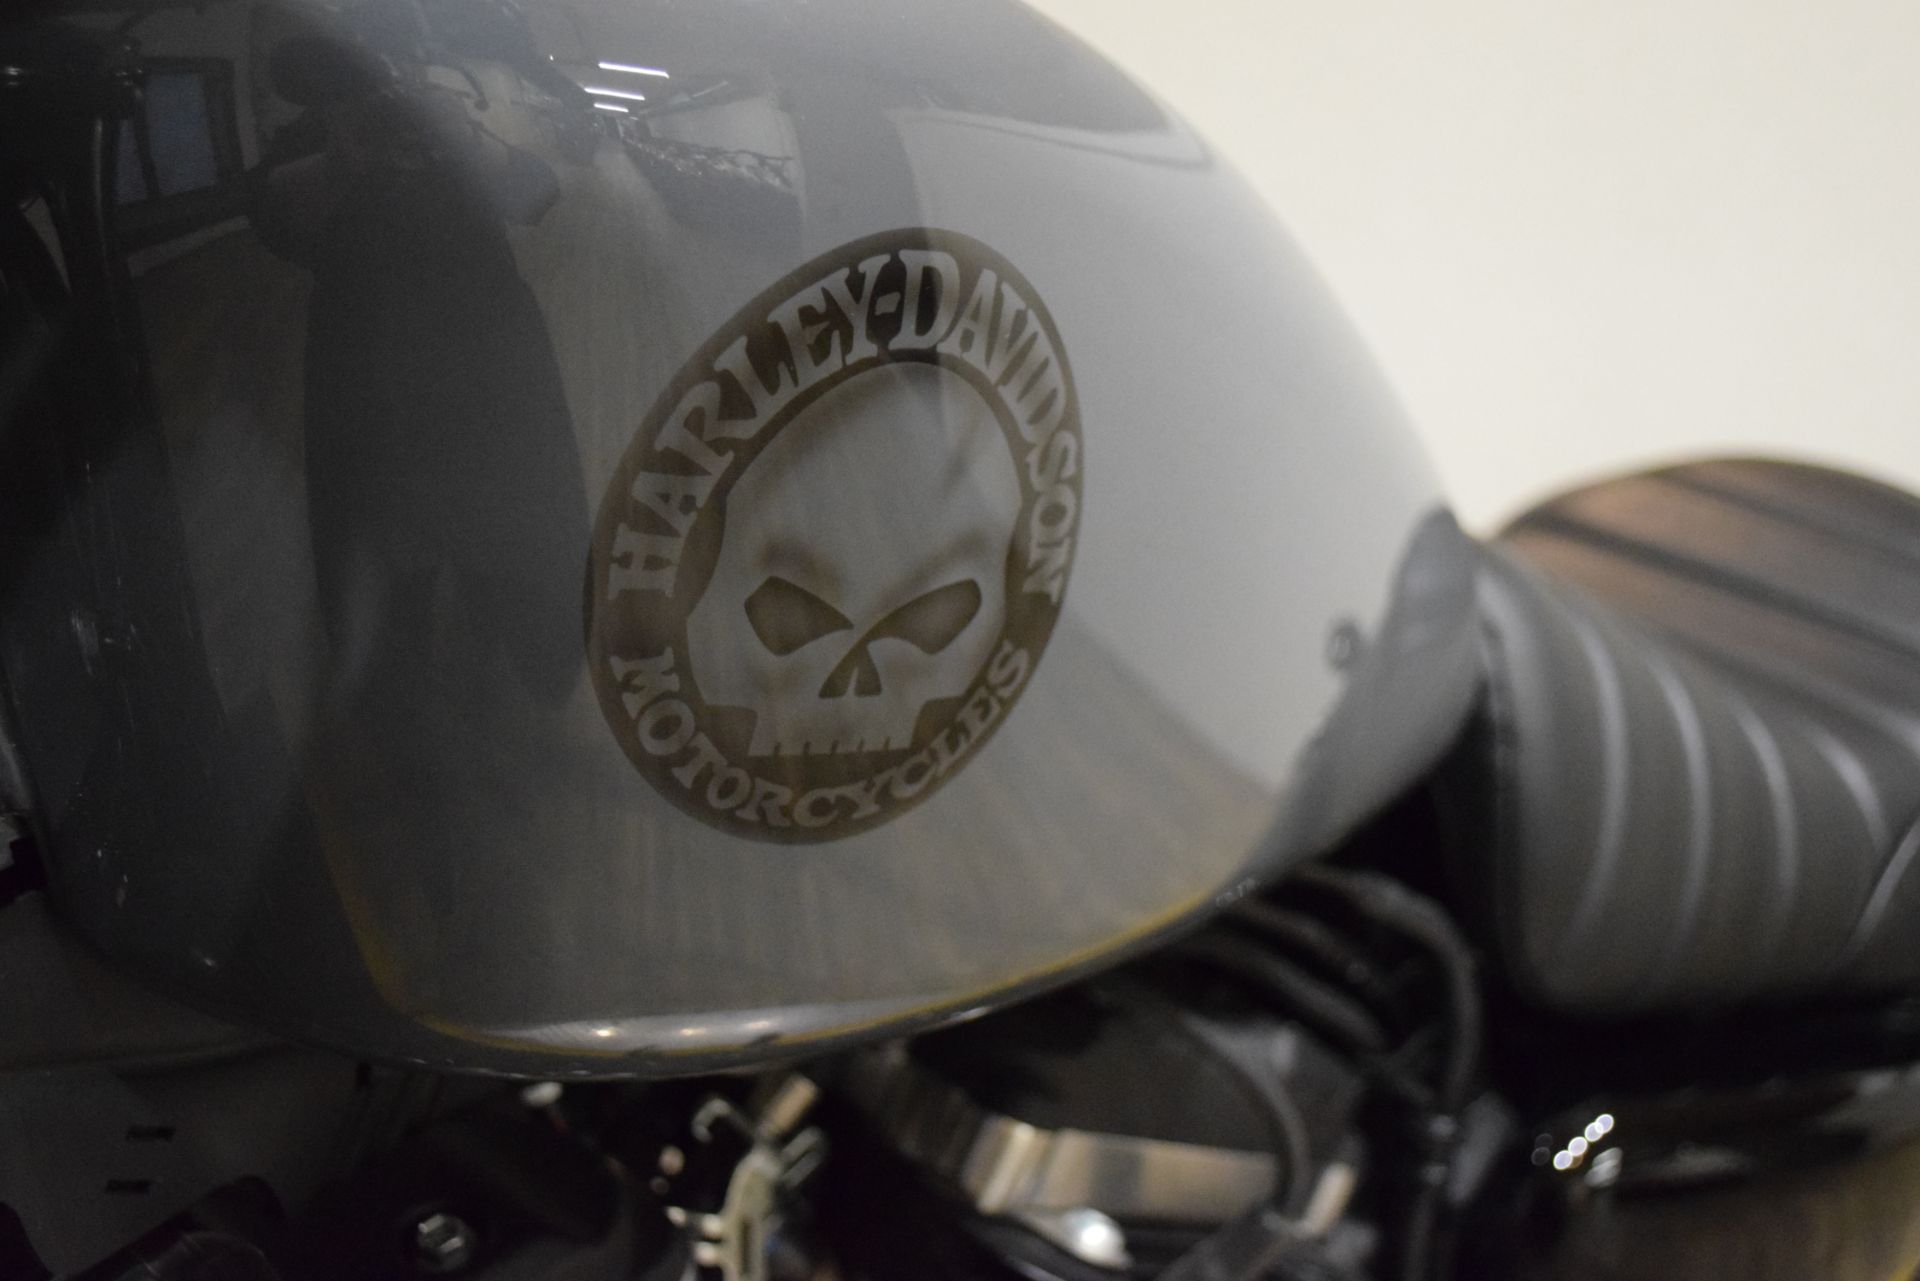 2022 Harley-Davidson Iron 883™ in Wauconda, Illinois - Photo 20